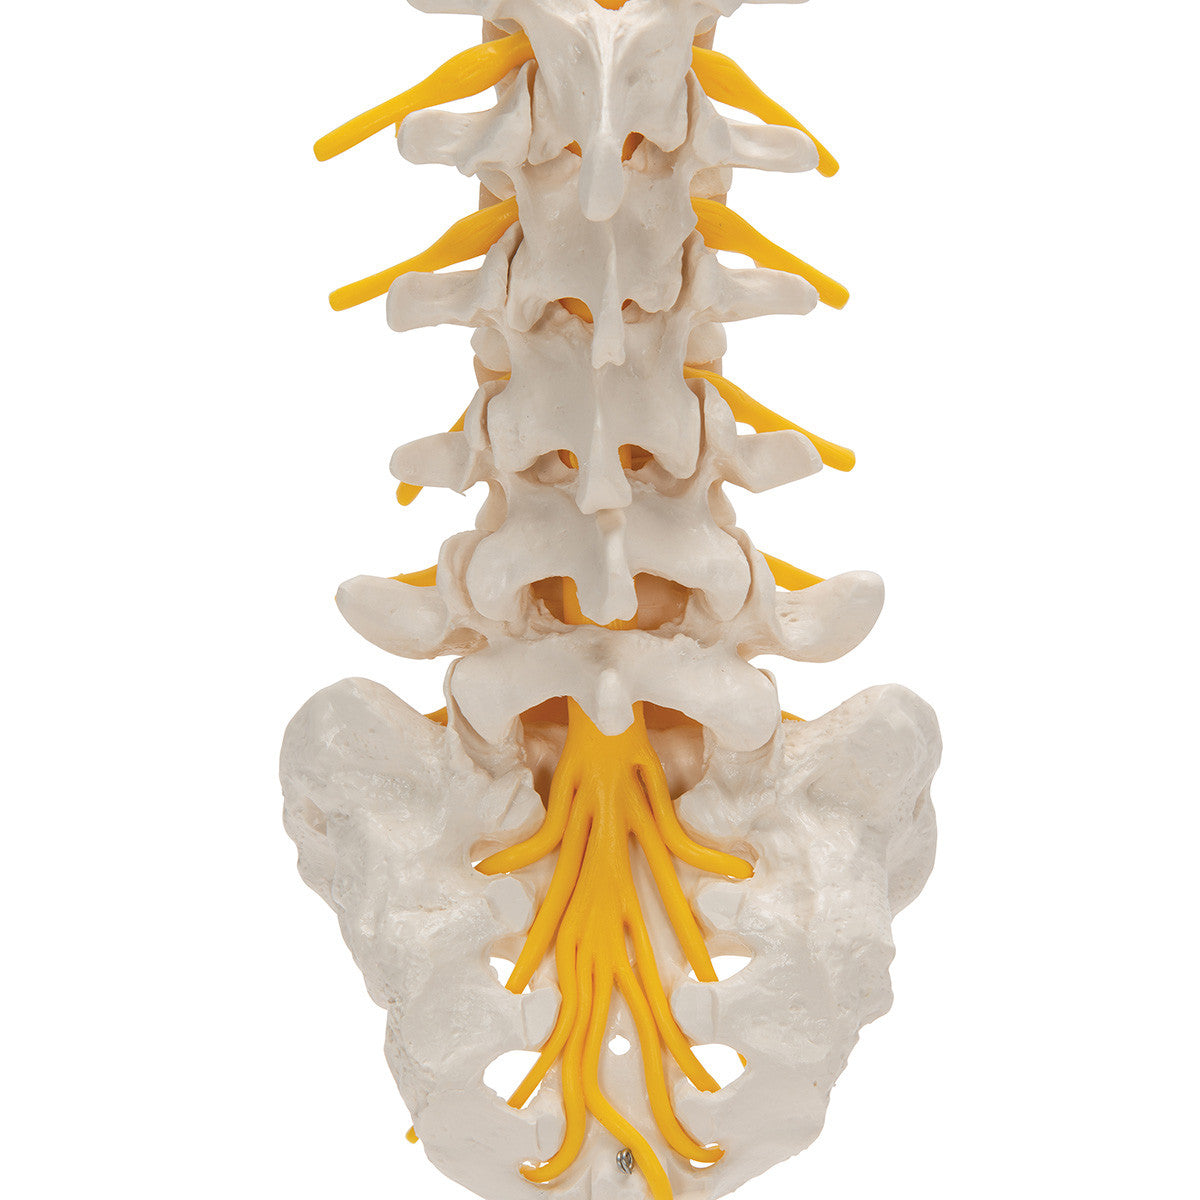 a74_07_1200_1200_lumbar-human-spinal-column-model-3b-smart-anatomy__87317.1589752912.1280.1280.jpg